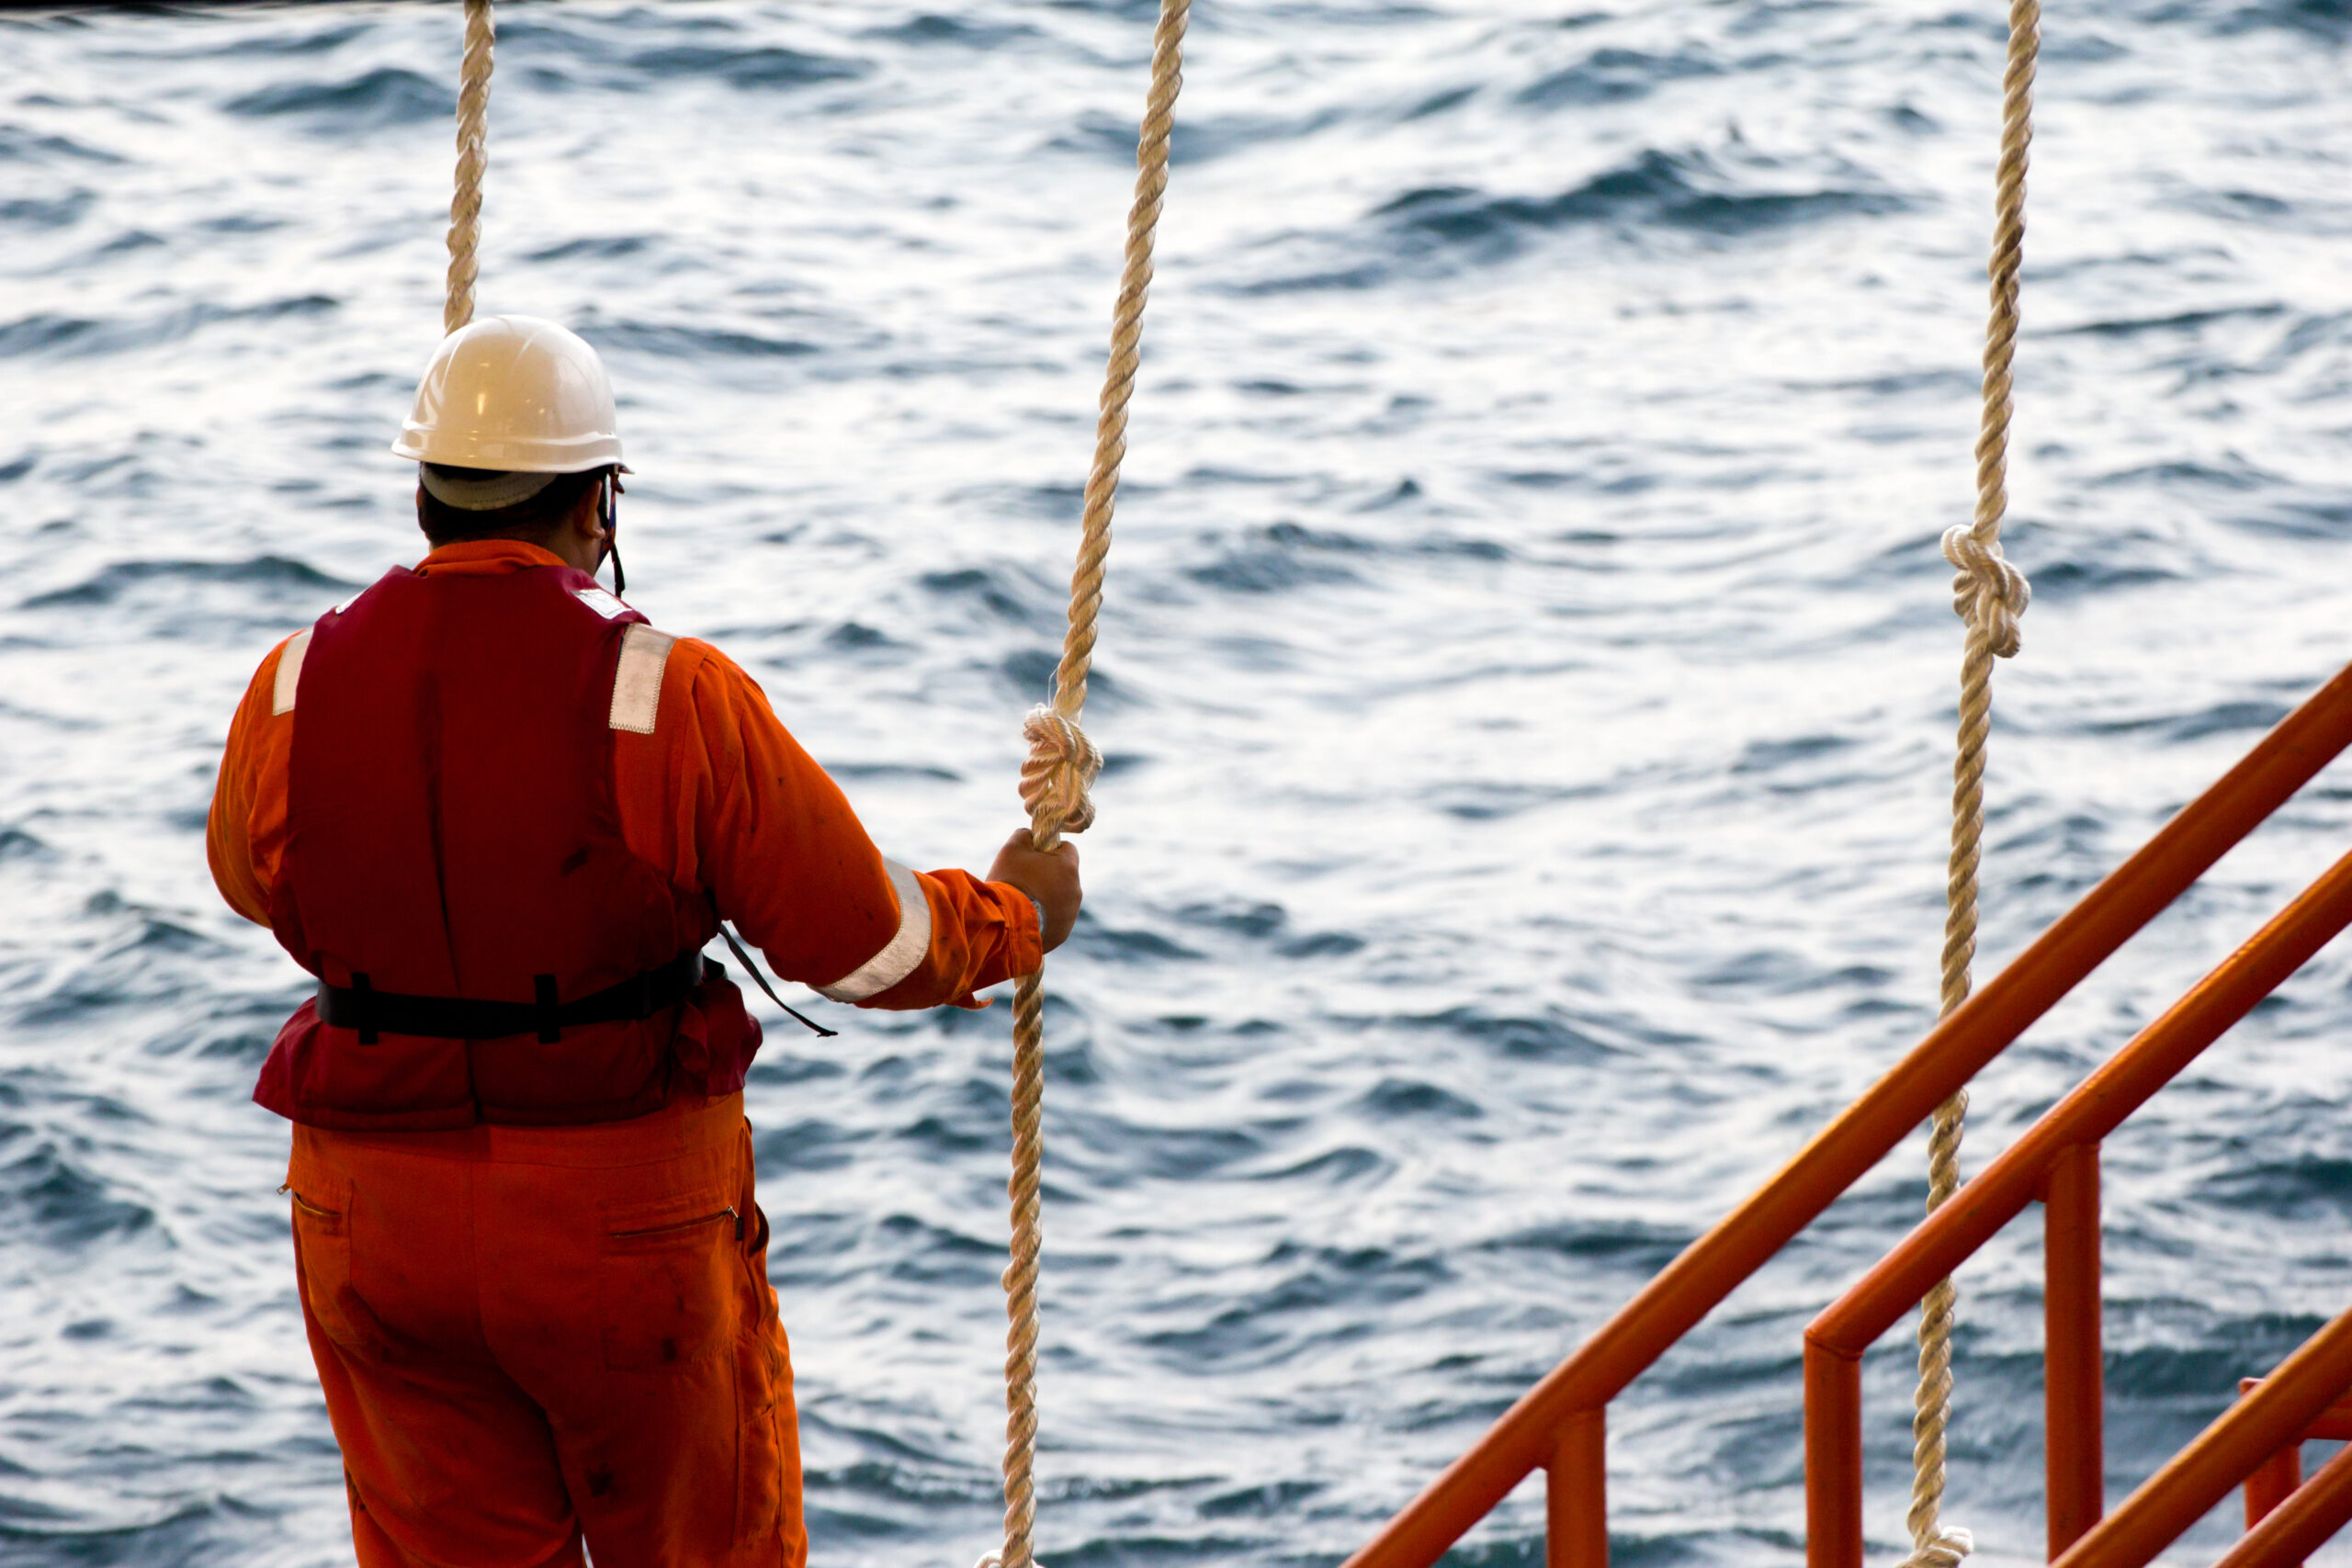 Has Offshore Work Gotten More Dangerous in the Last Five Years?